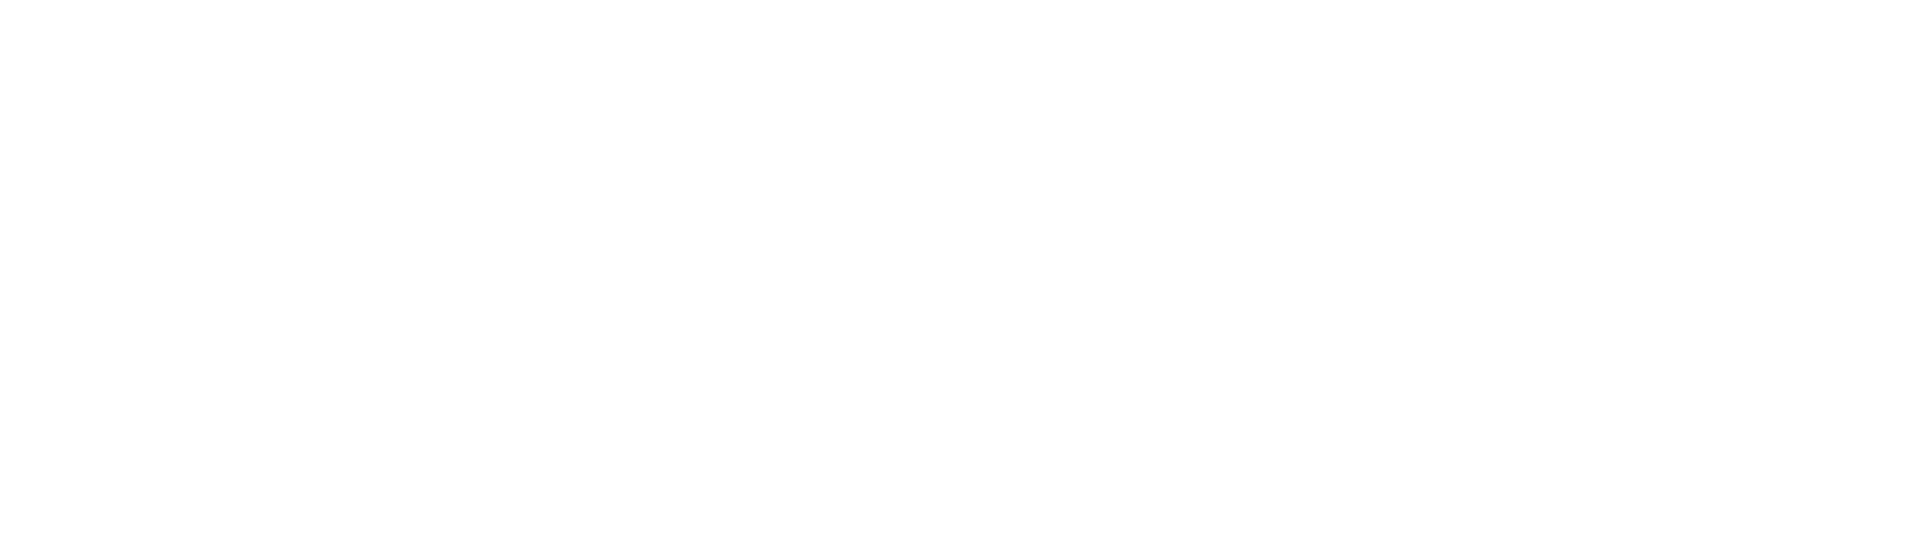 striding_man_2